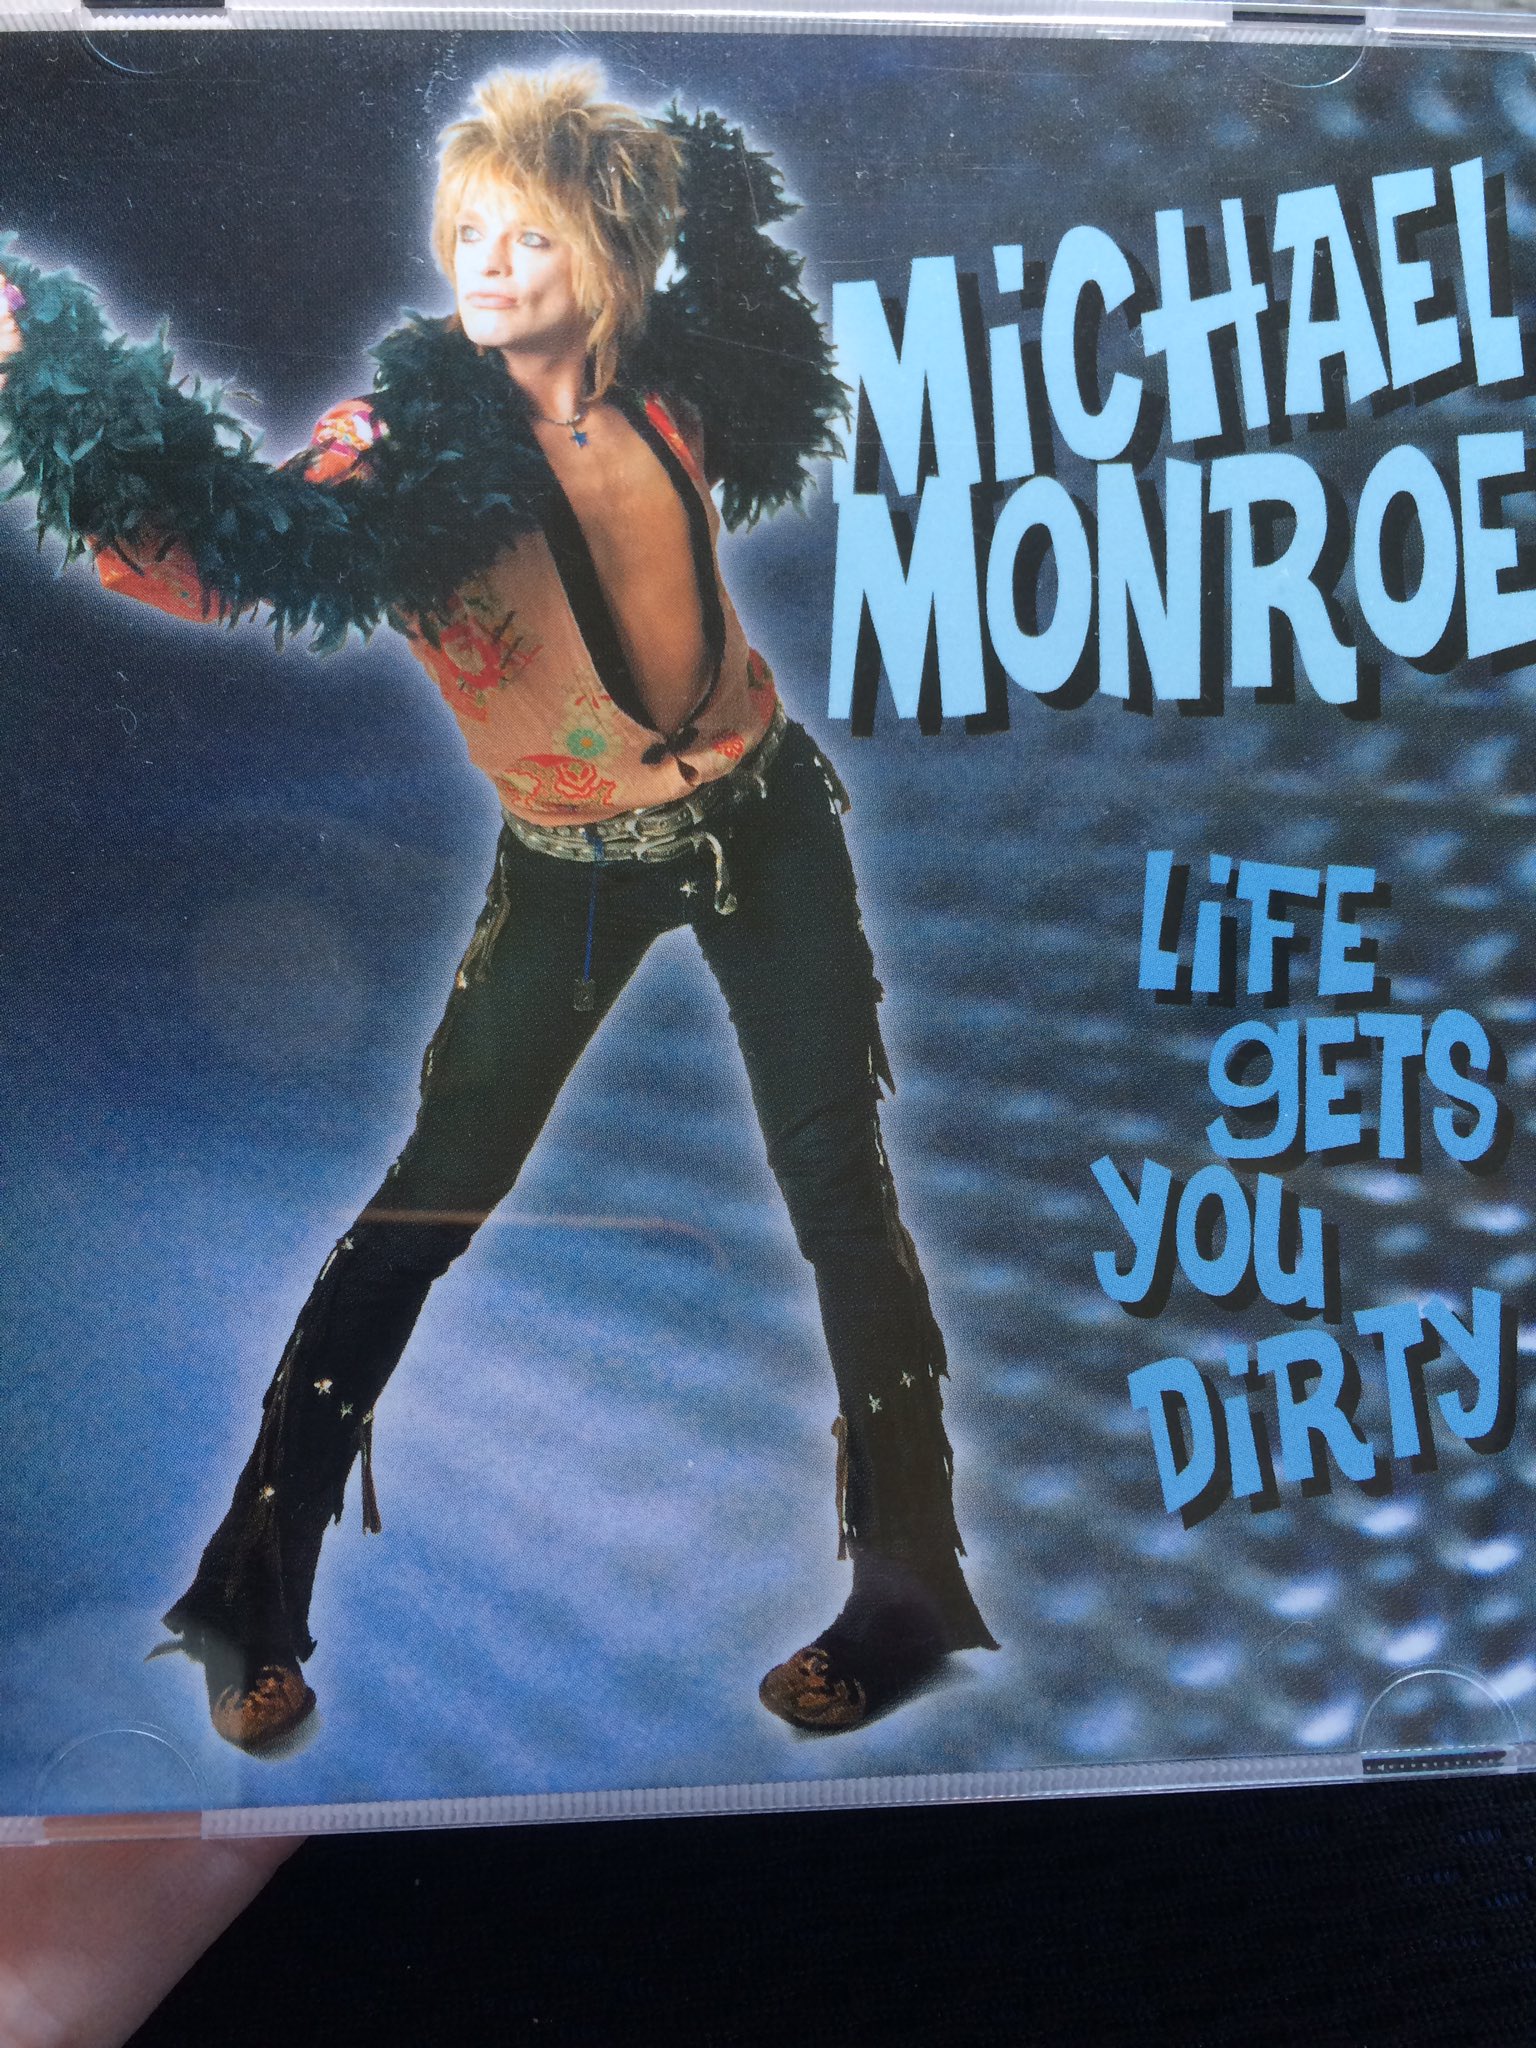                     Birthday
Michael Monroe  Life Gets You Dirty               (^^)/ 